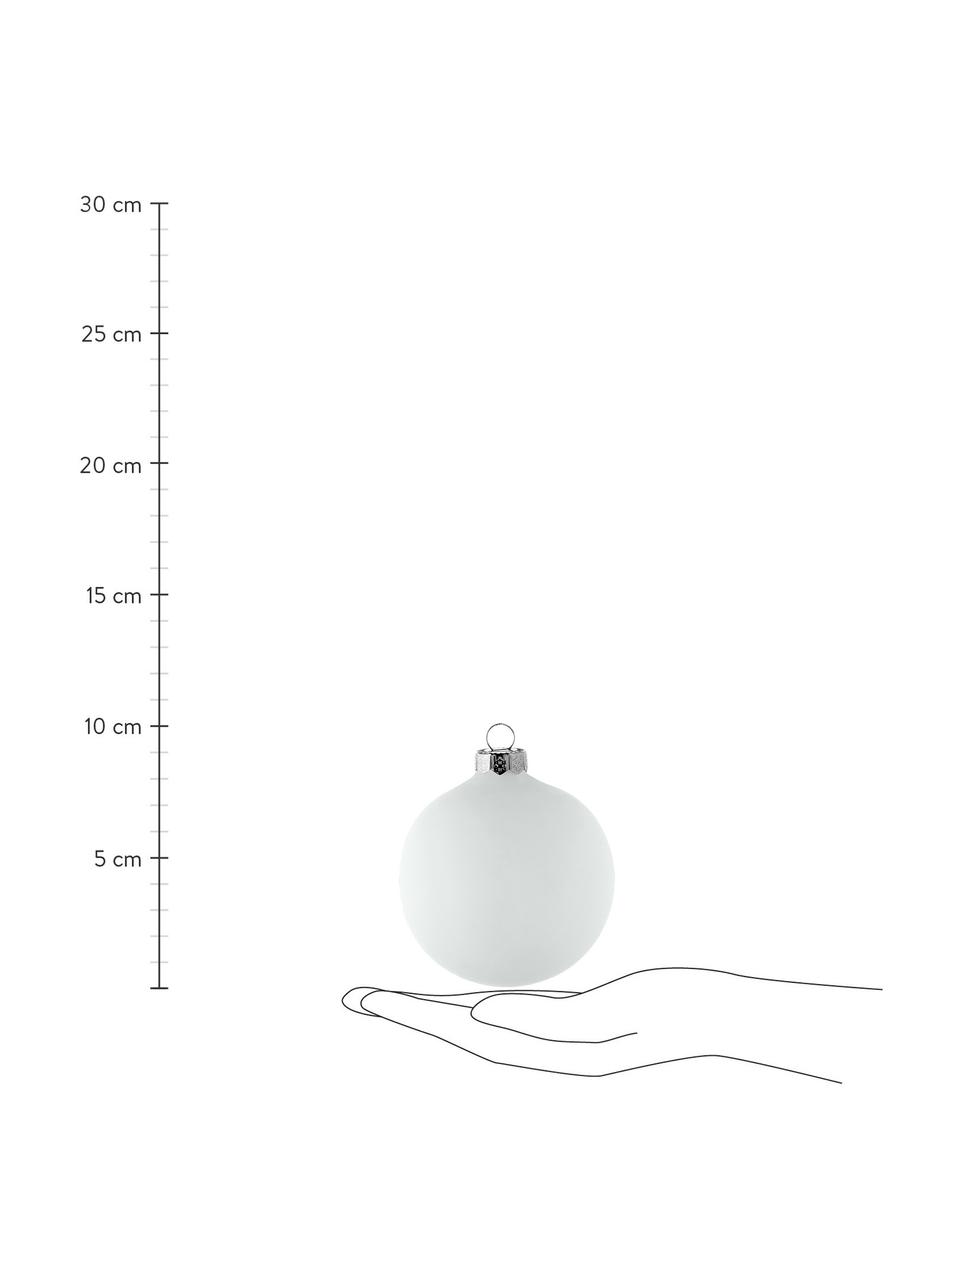 Bolas de Navidad Evergreen, Ø 8 cm, 6 uds., Blanco, Ø 8 cm